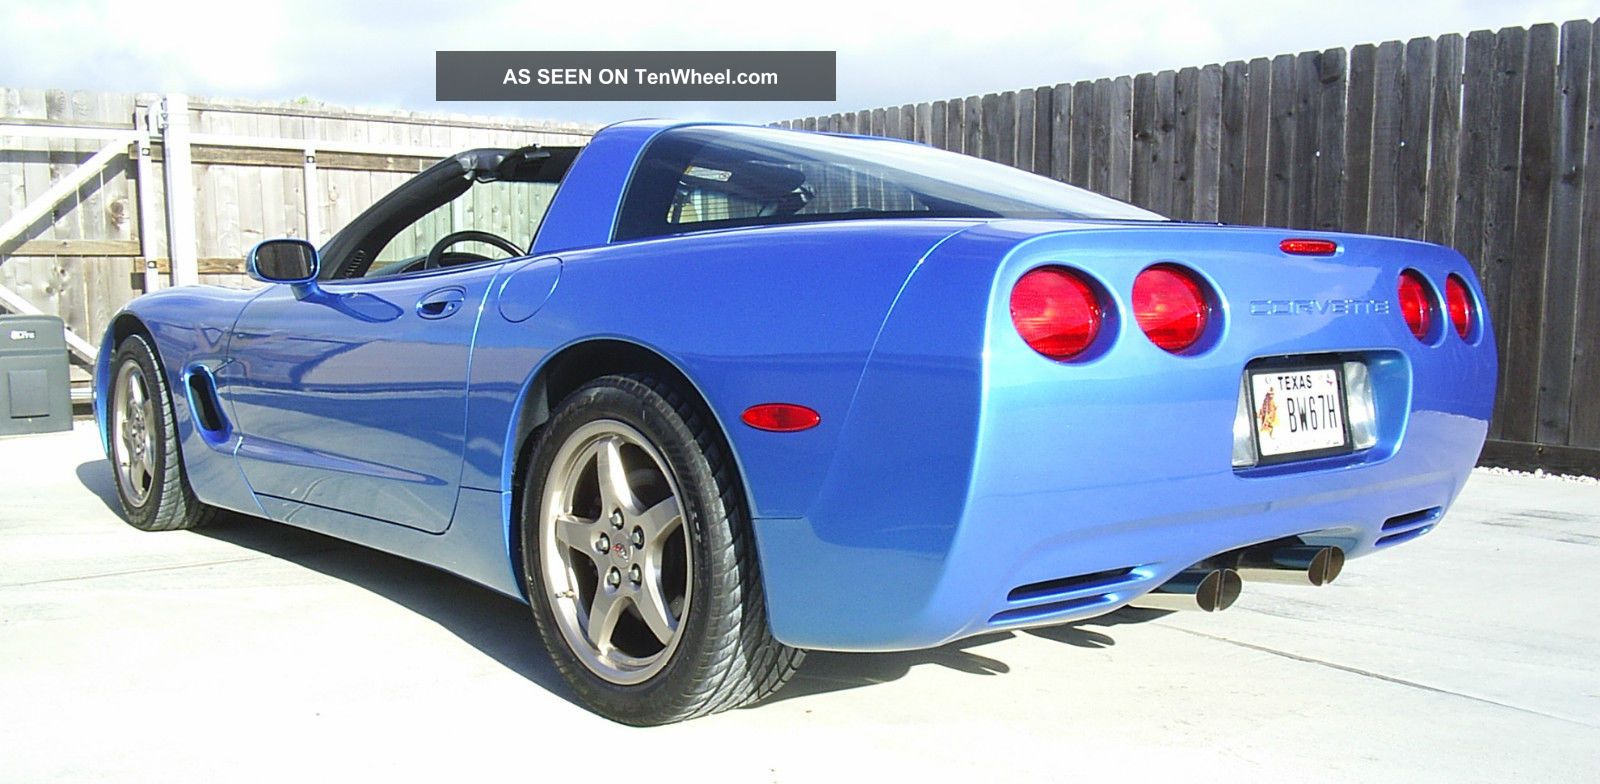 2000 (c5) Chevrolet Corvette Coupe Nassau Blue Metallic.